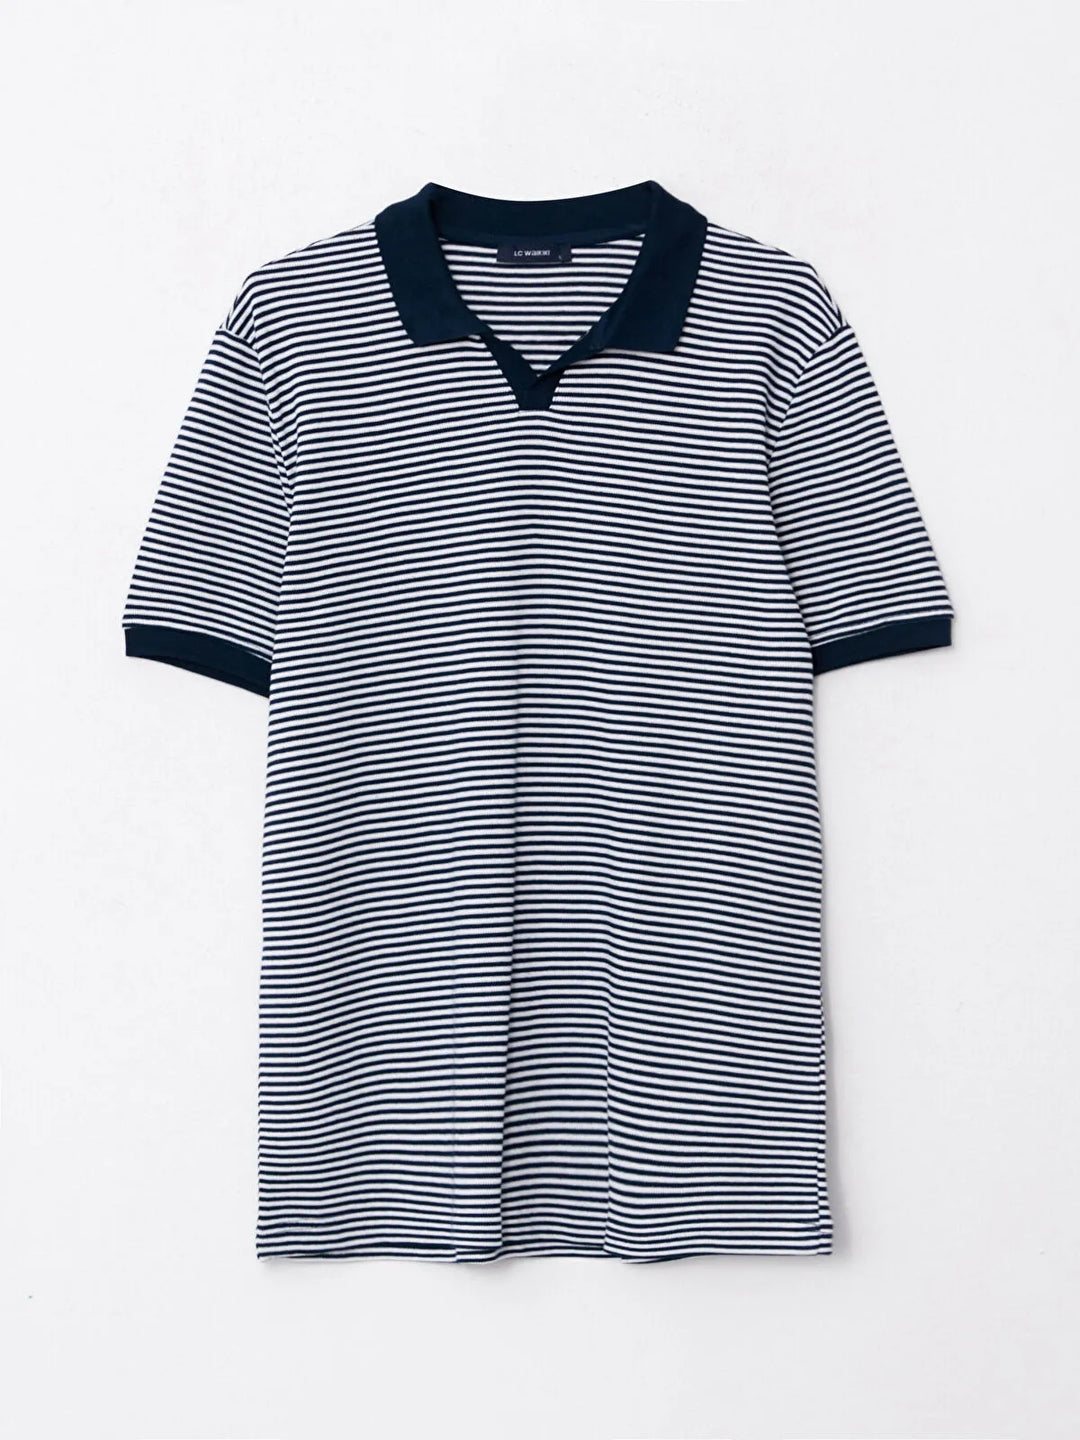 Lcw Classic Polo Collar Short Sleeve Striped Men T-Shirt